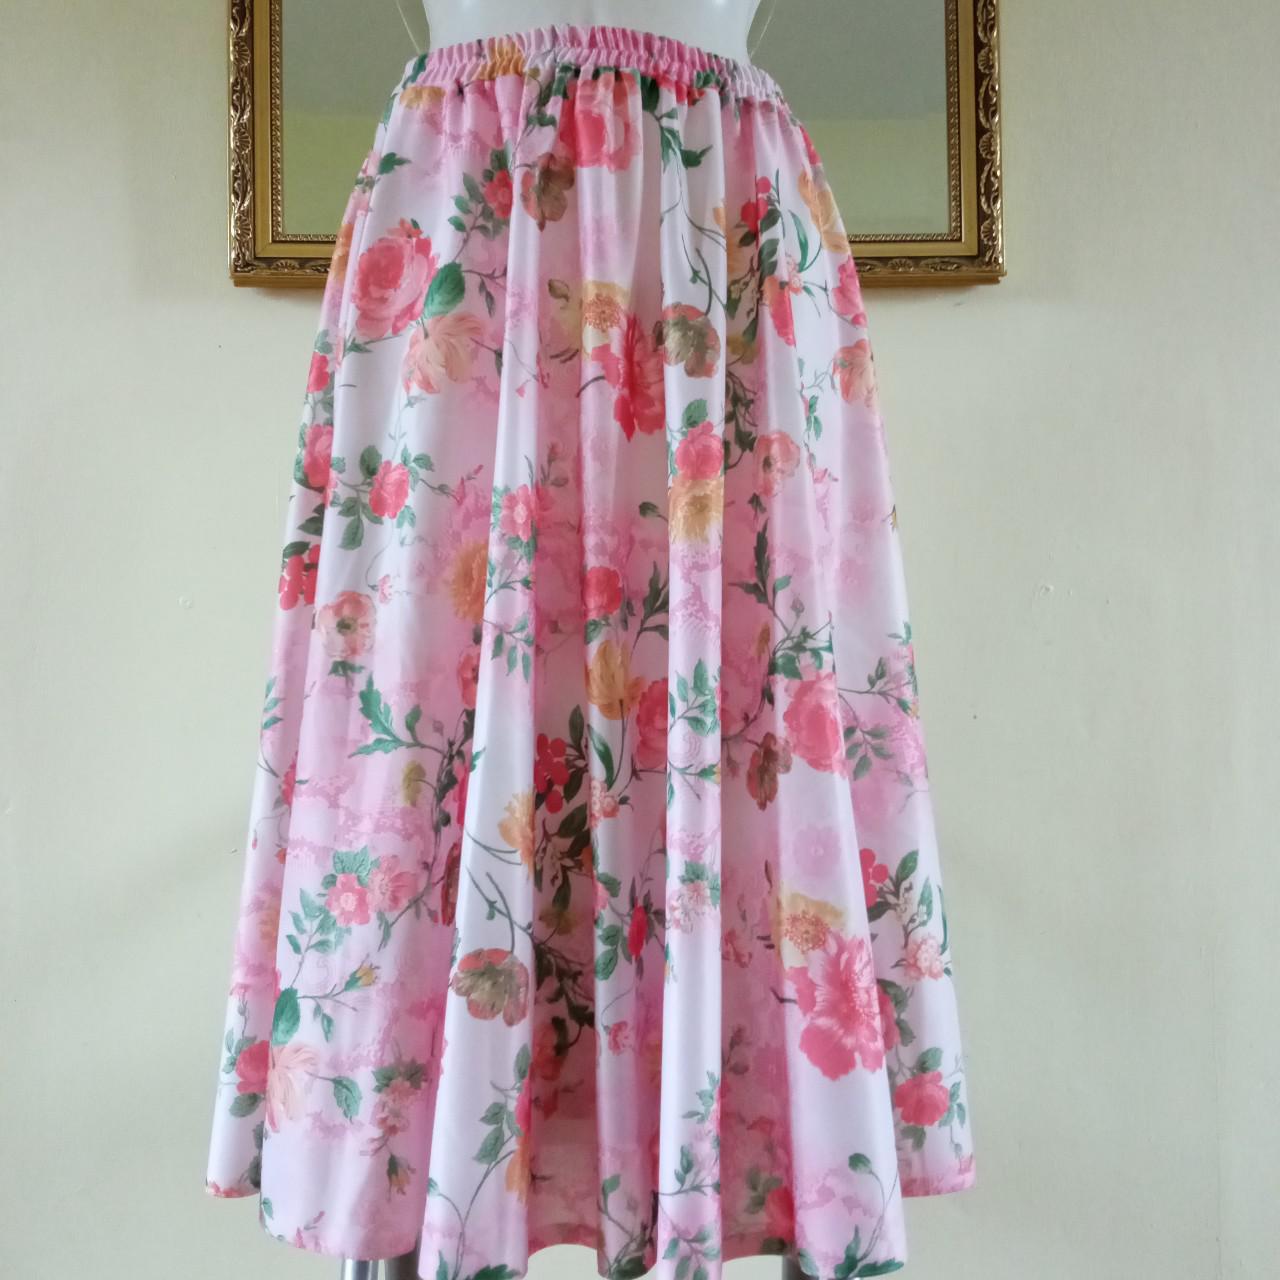 Product Image 1 - Vintage Pink Floral pattern Skirt.
Multicoloured